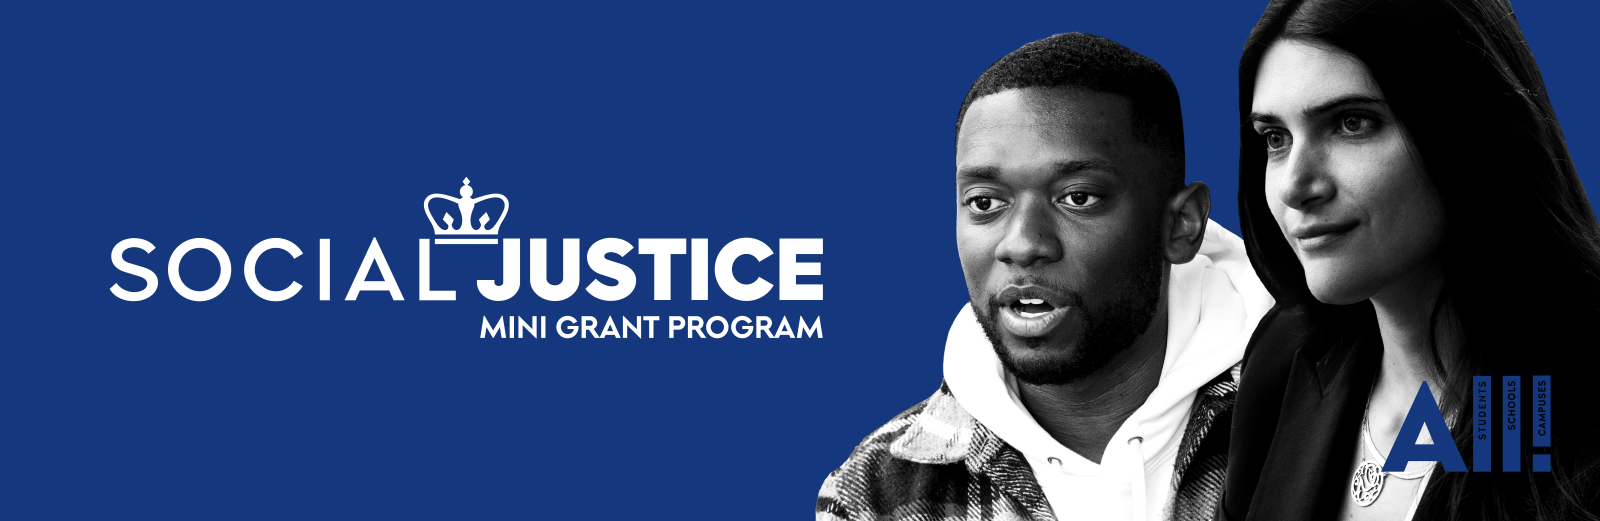 Social Justice Mini-Grant Program hero image